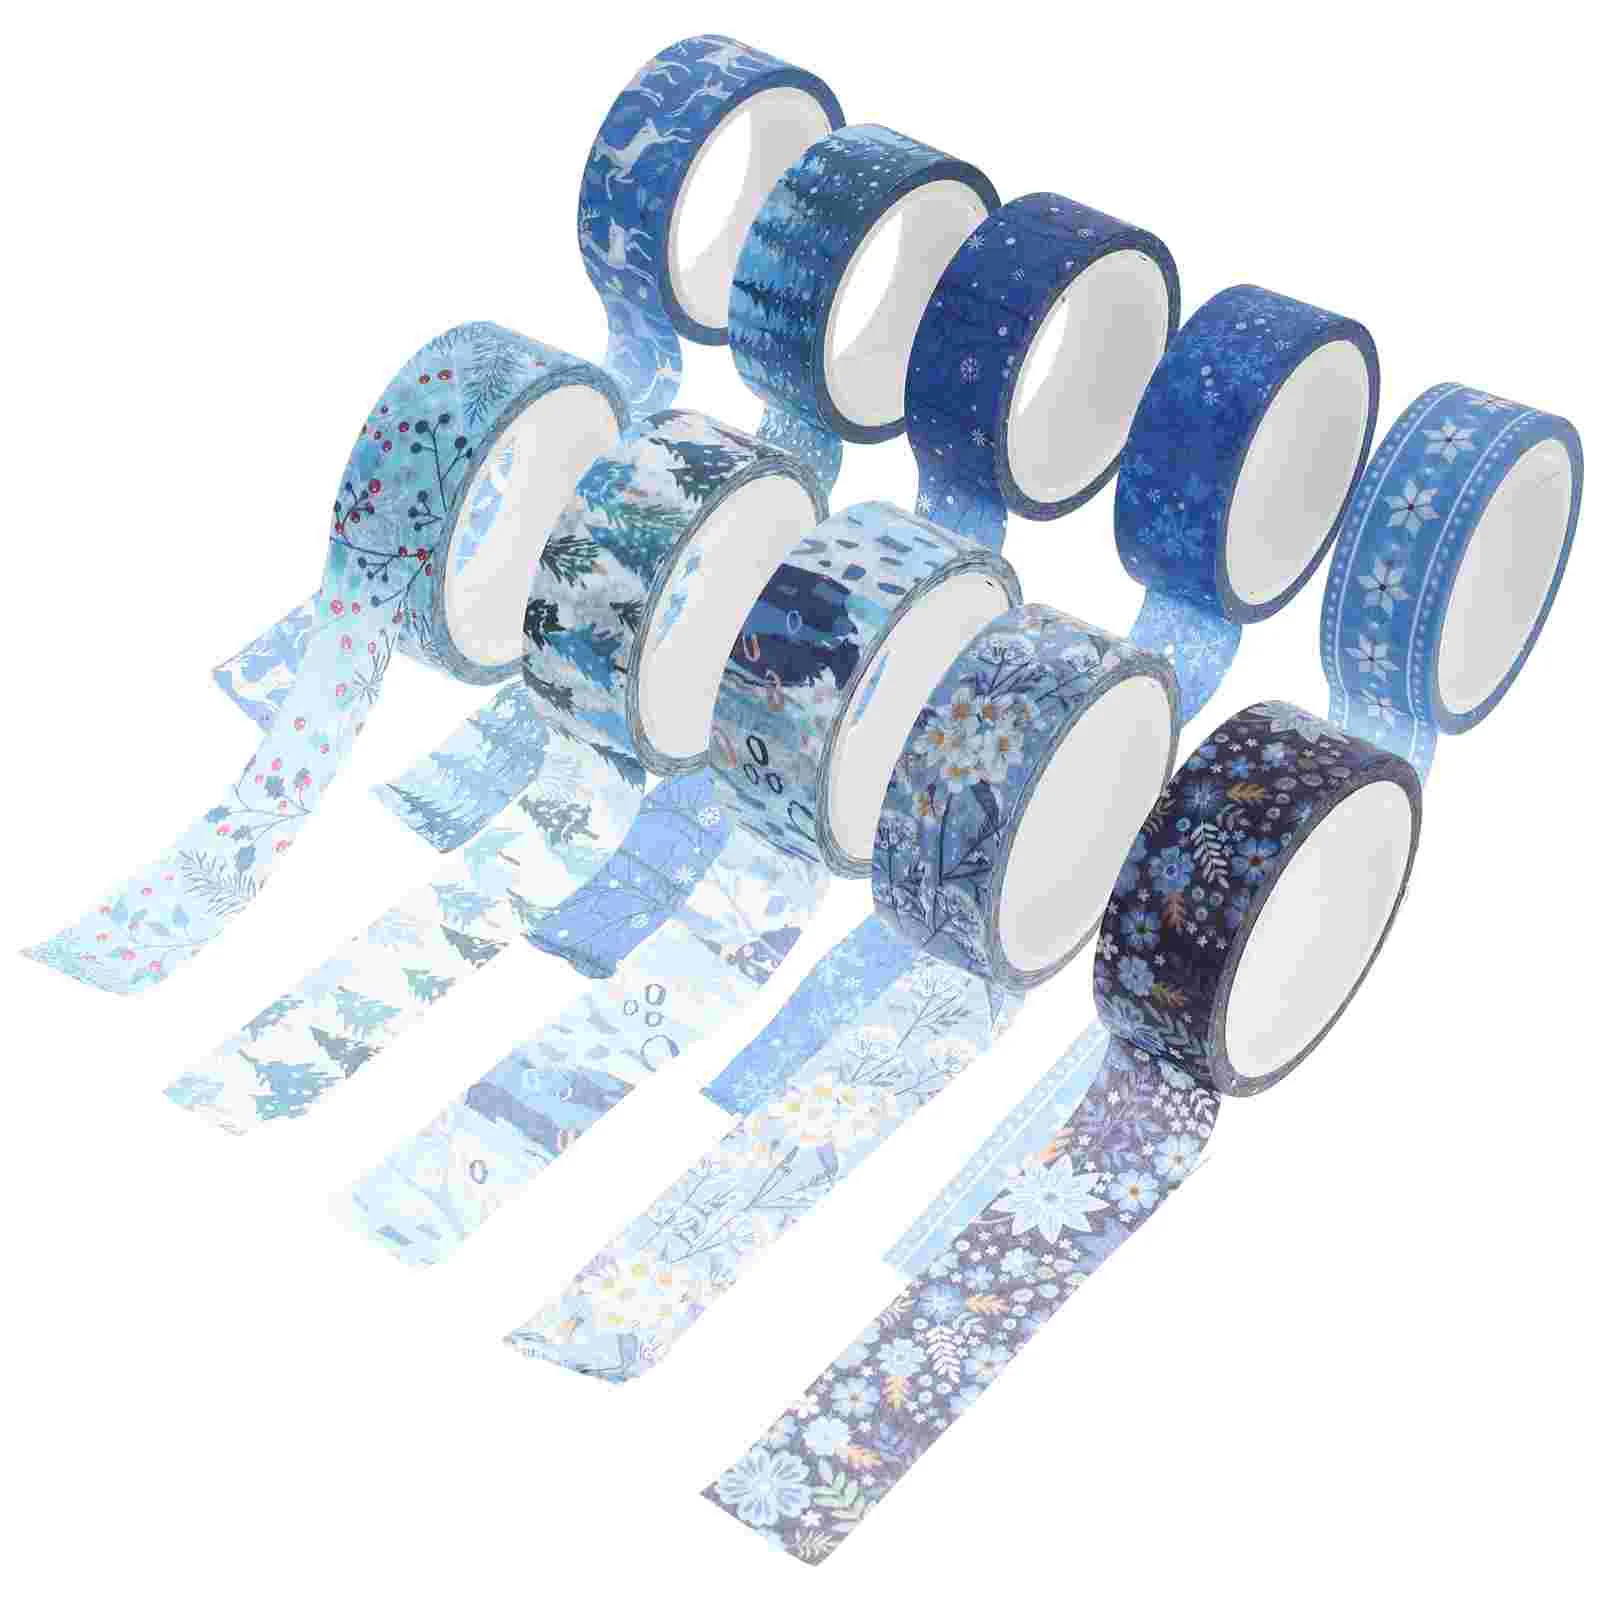 

10 Rolls of Washi Tape Winter Season Themed Washi Tape Christmas Elements Washi Tape Home Decor Tapes